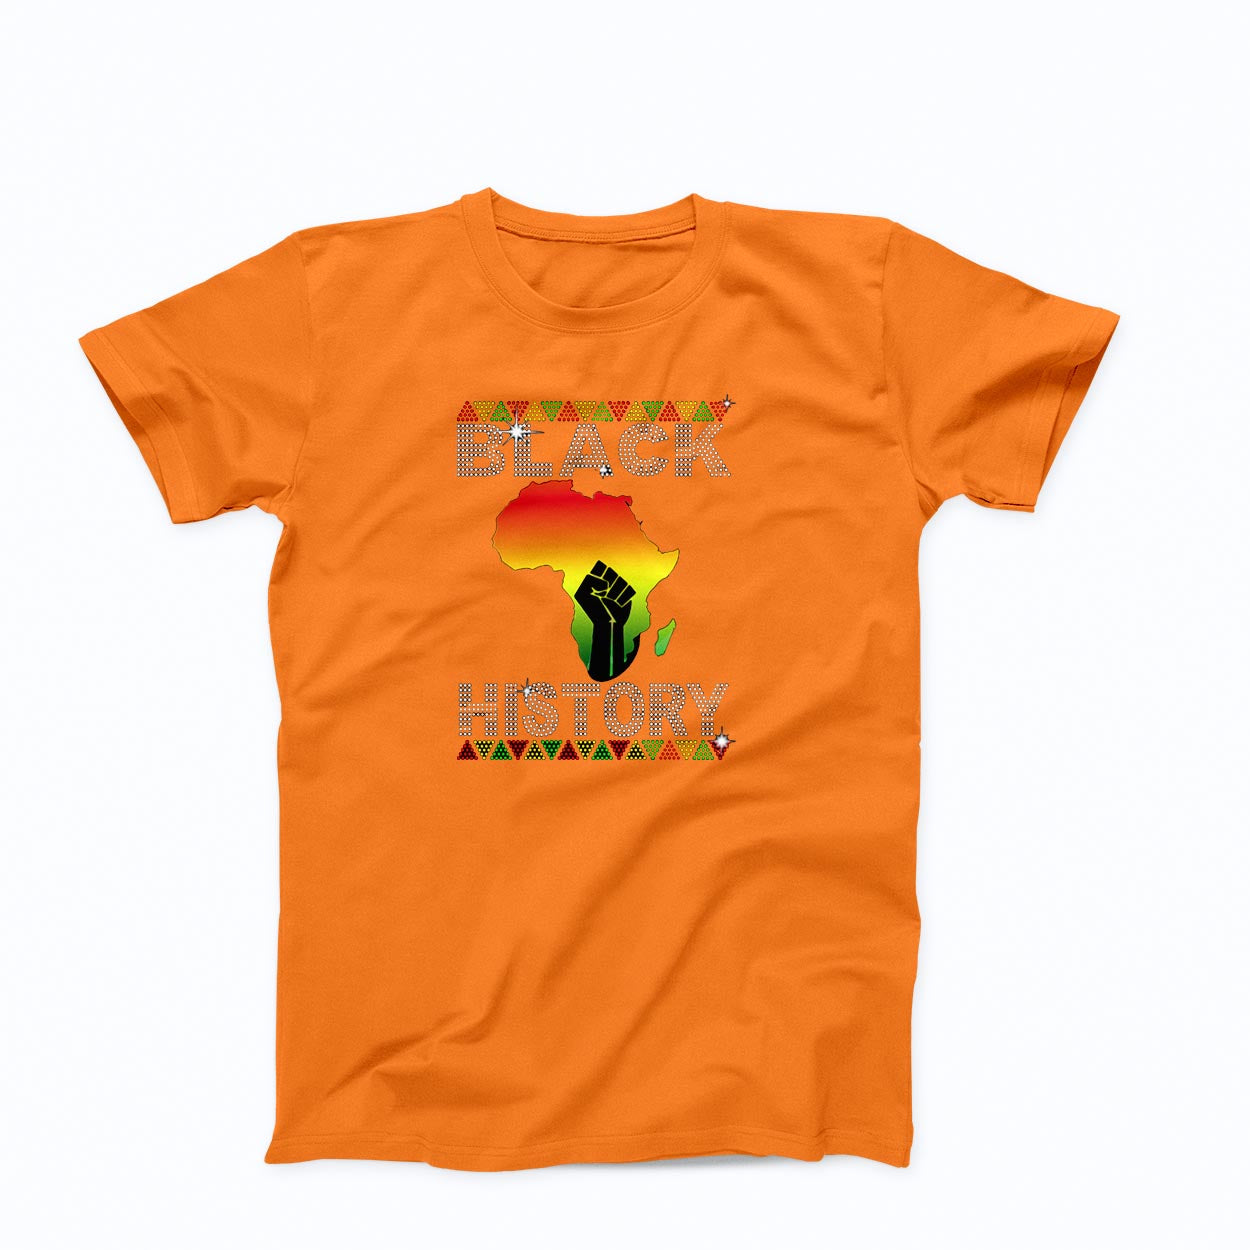 T-shirt: Black History Rhinestones